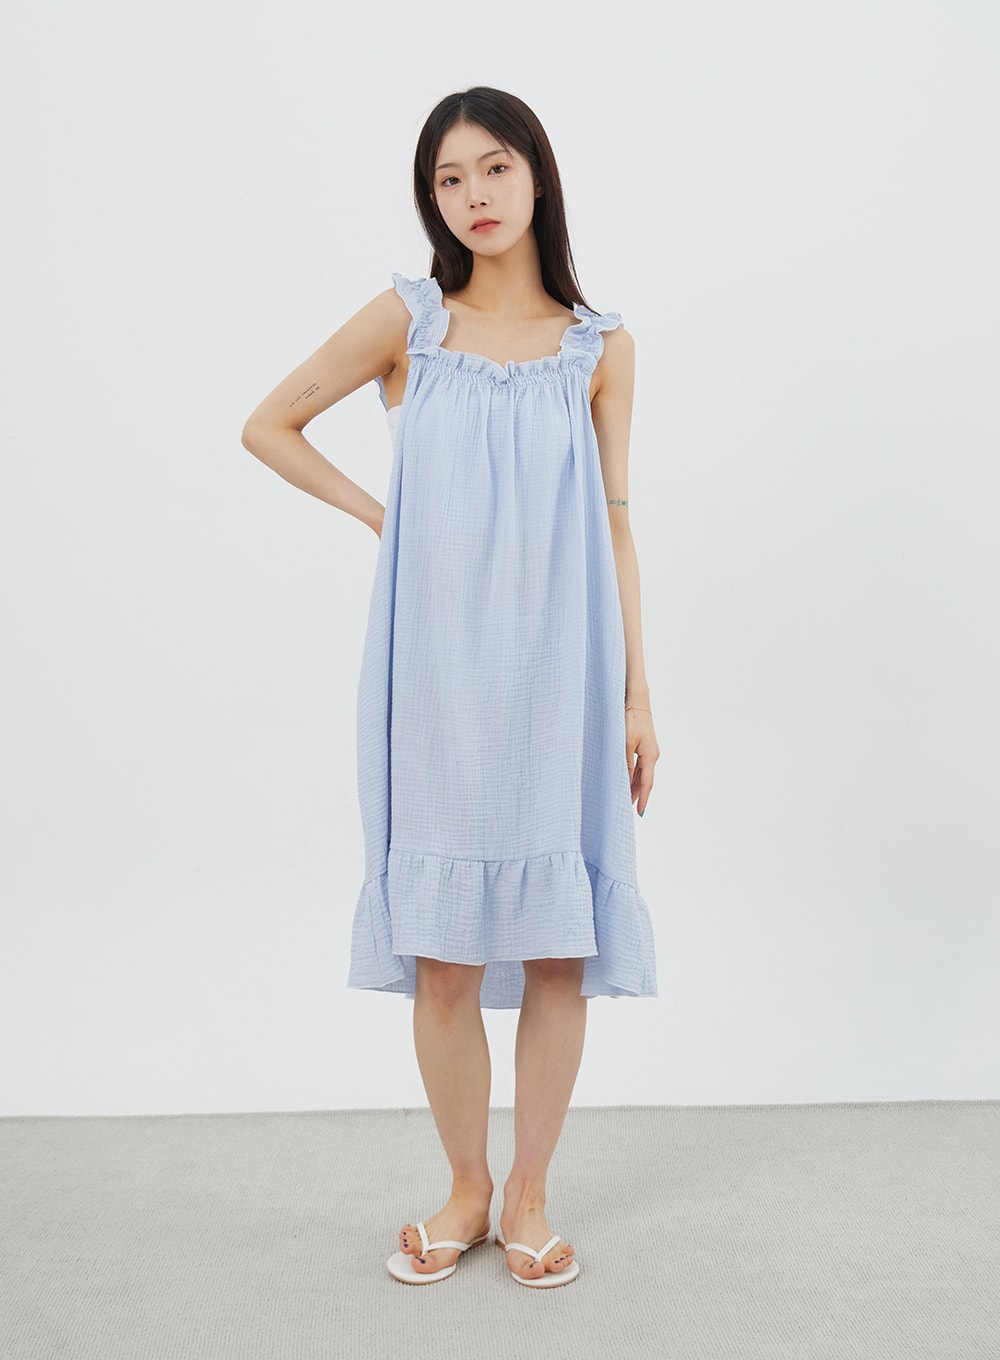 sleeveless-nightgown-iy323